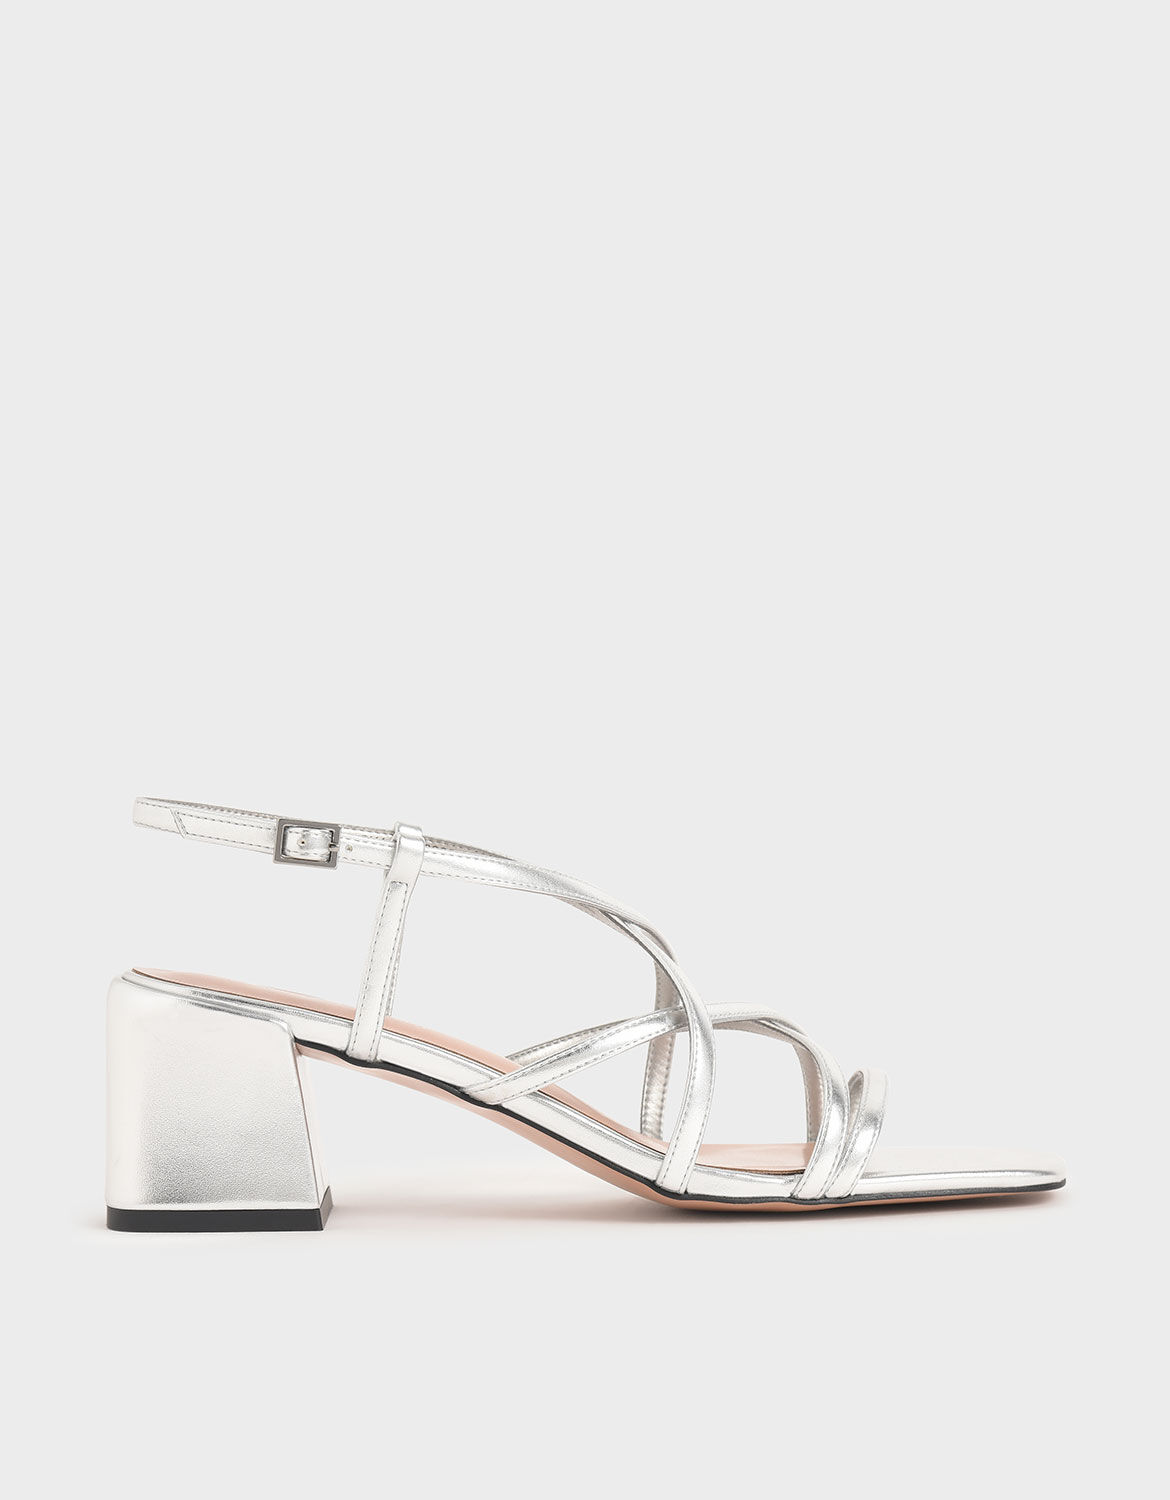 silver block heel strappy sandals